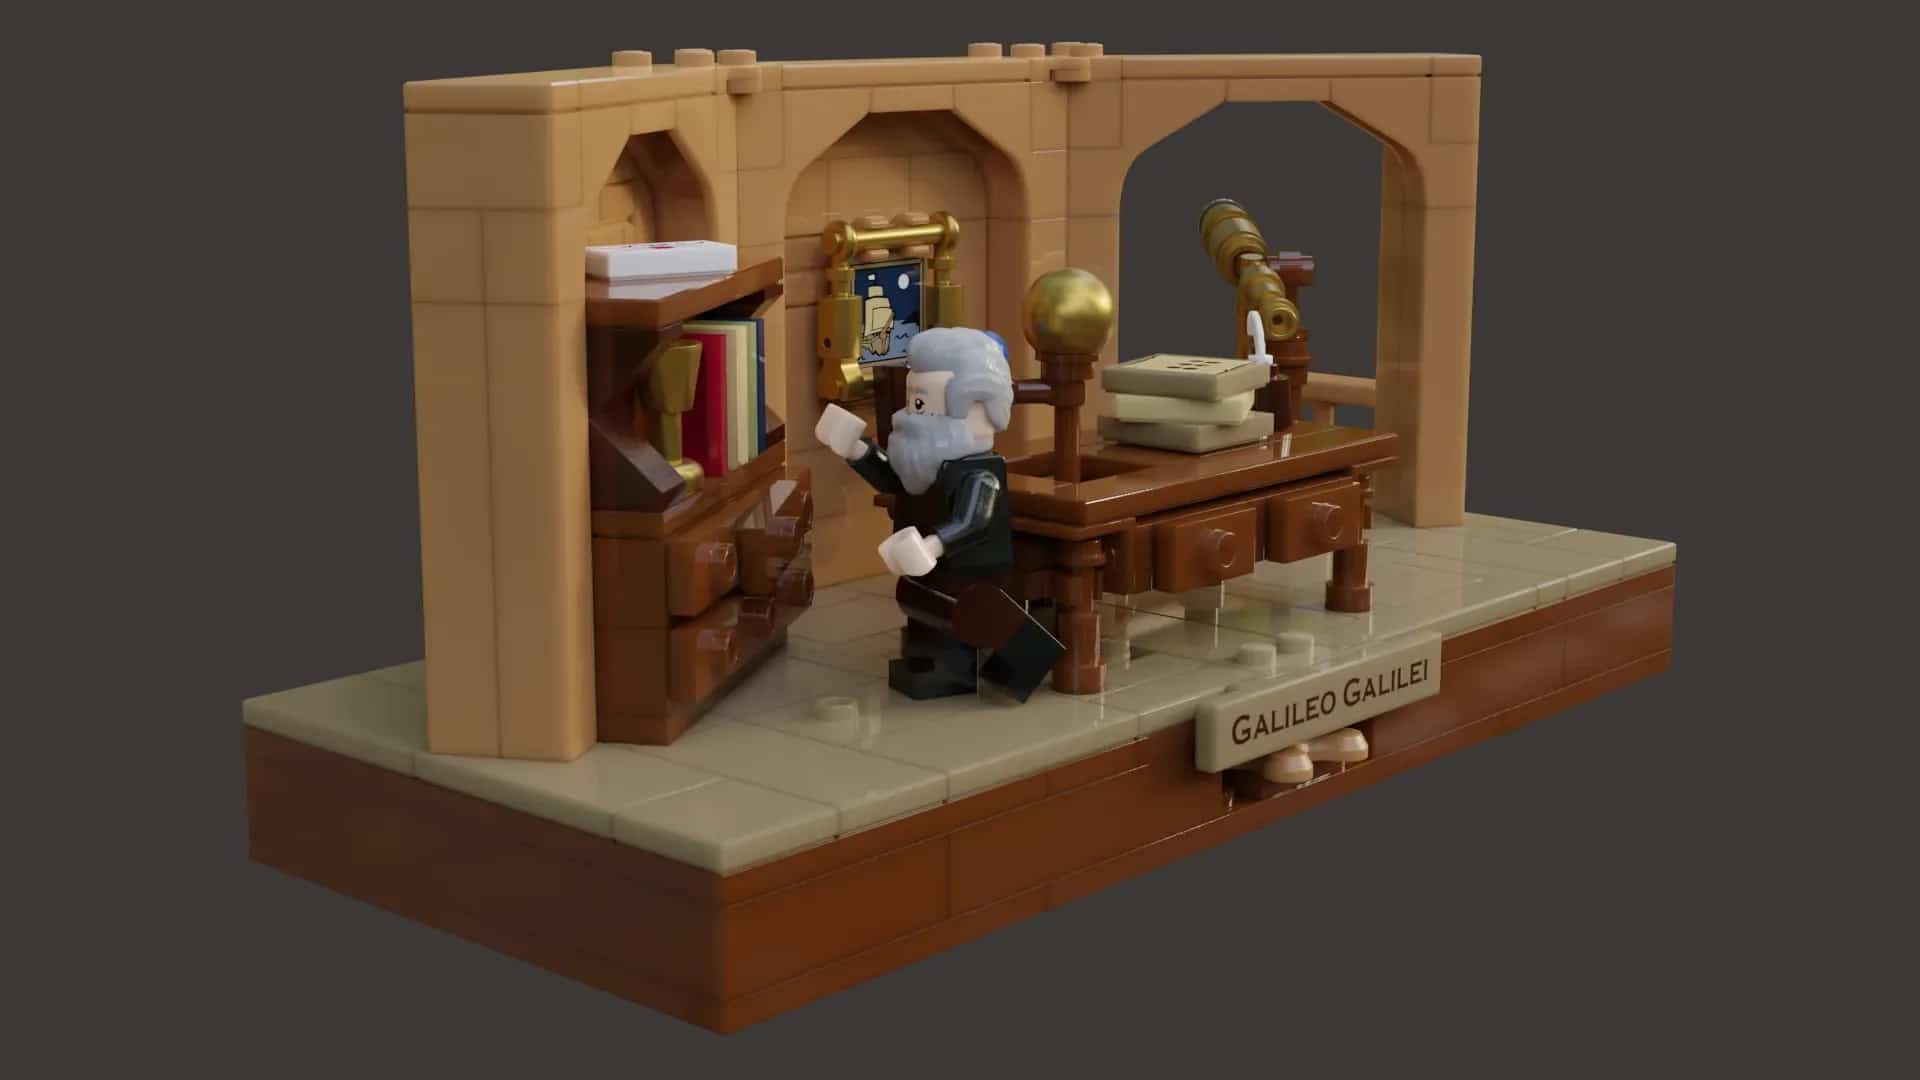 LEGO Tribute to Galileo Galilei 2